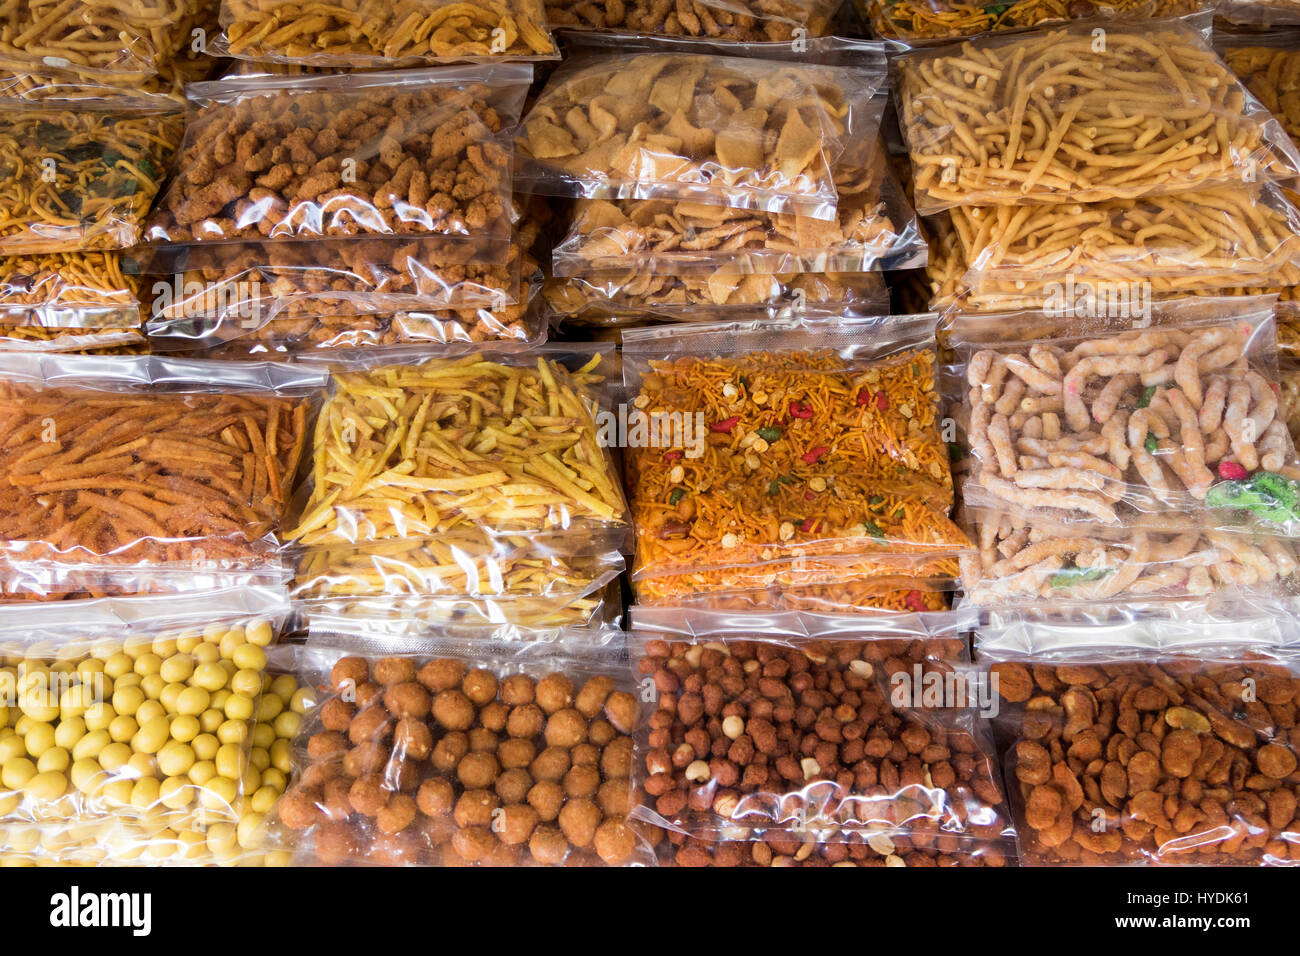 Traditional Malaysian snacks and treats, Kuala Lumpur, Malaysia Stock Photo